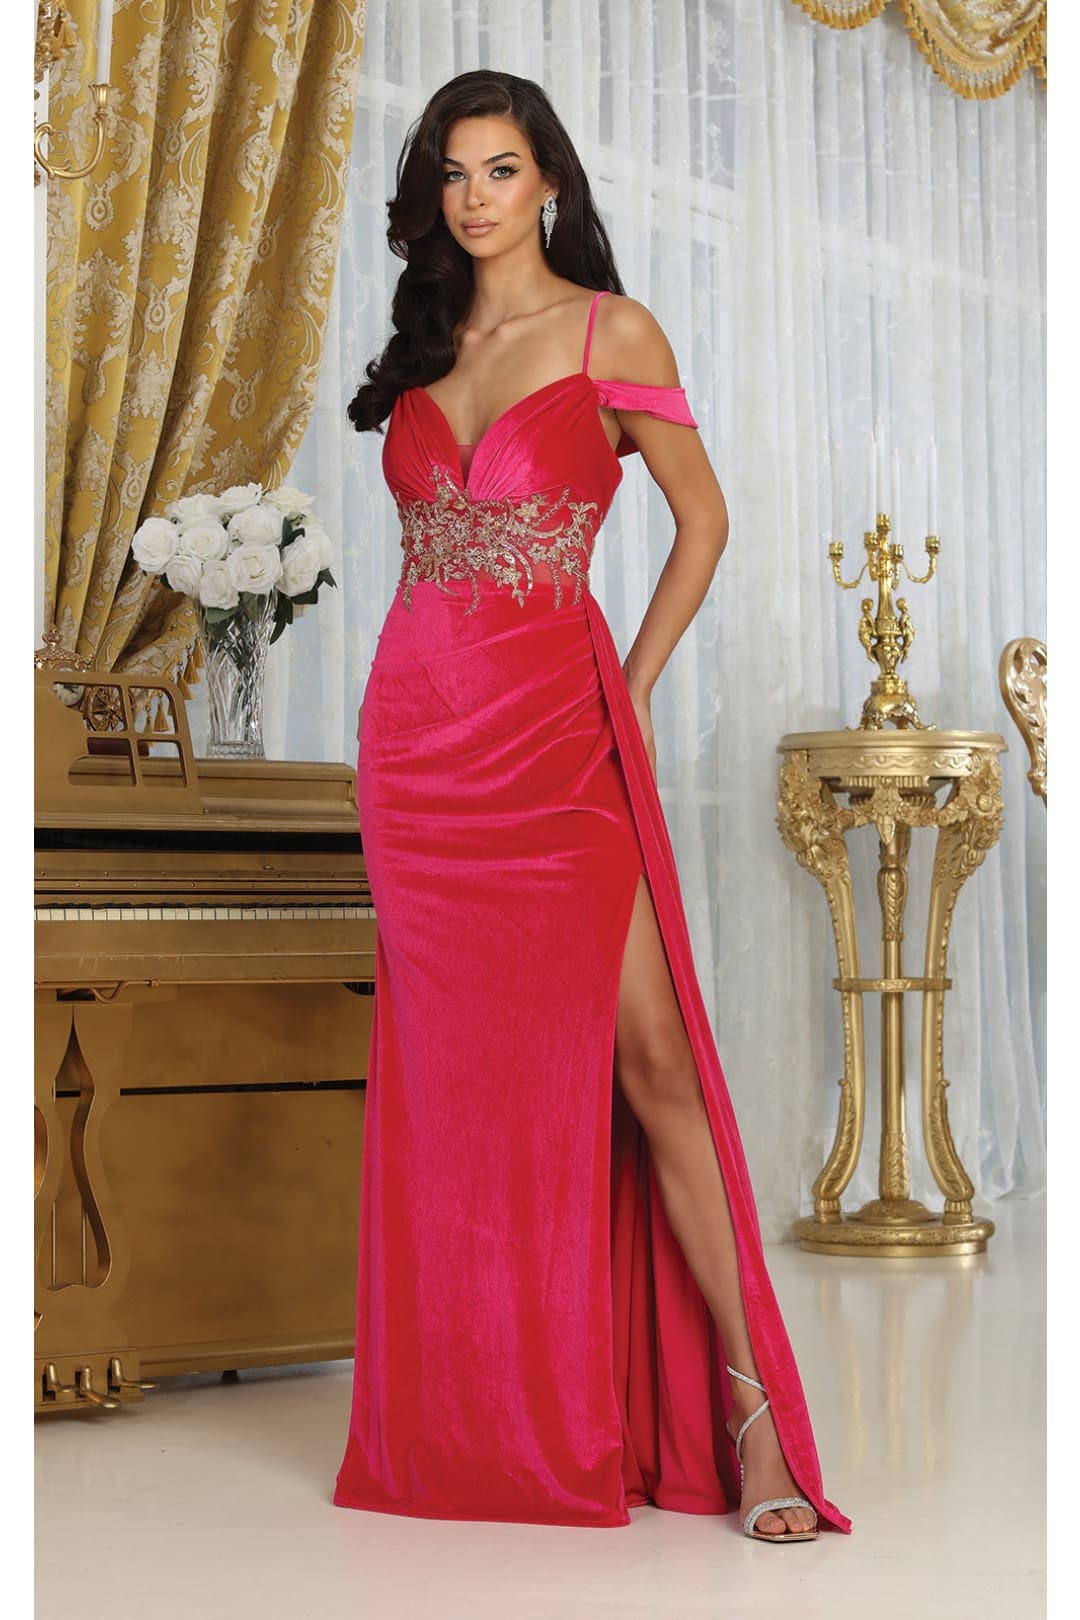 Royal Queen RQ8087 V-neck Spaghetti Straps Slit Velvet Prom Dress - FUCHSIA / 4 - Dress